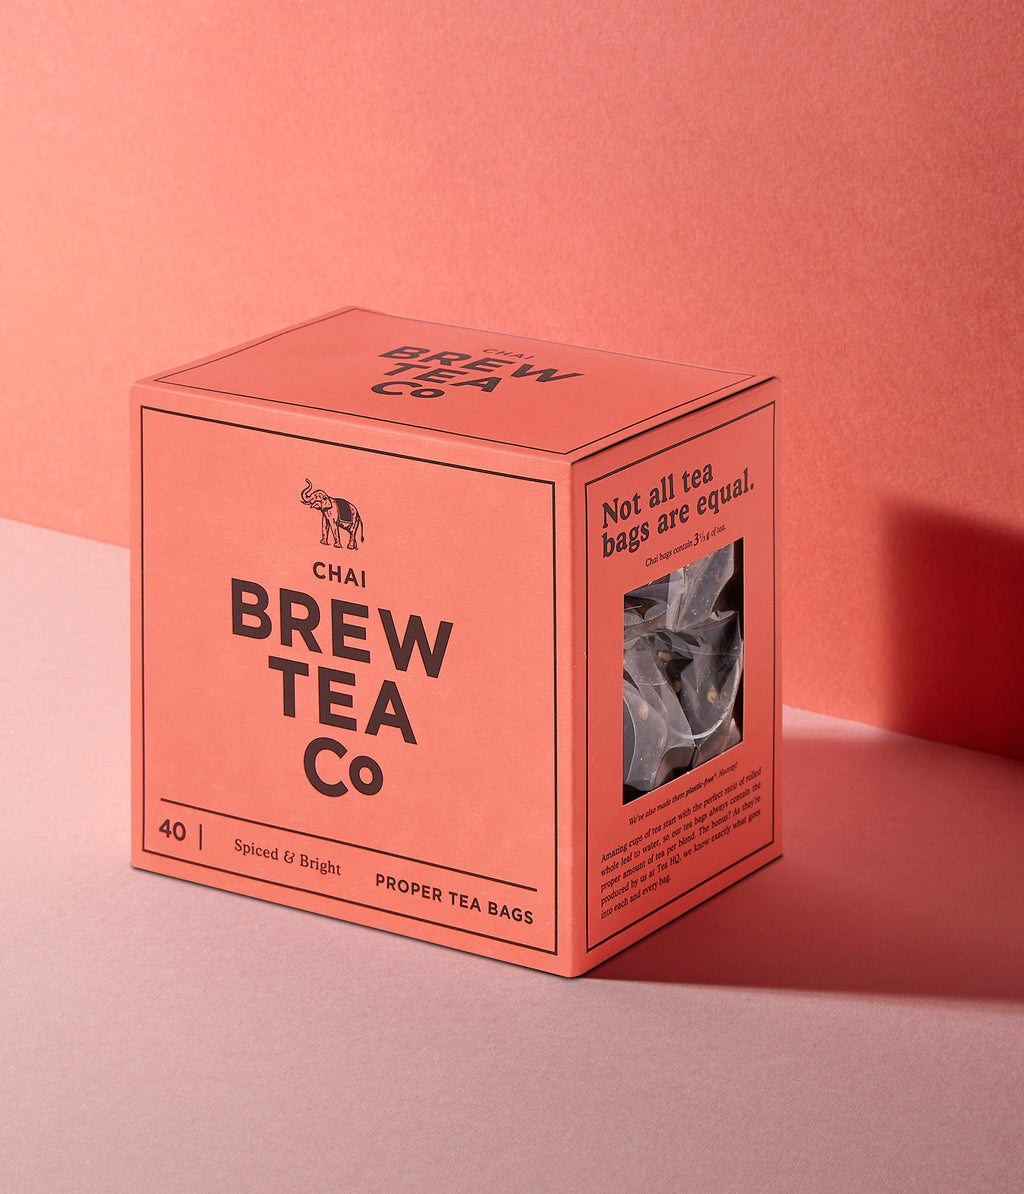 Chai Tea - Proper Tea Bags